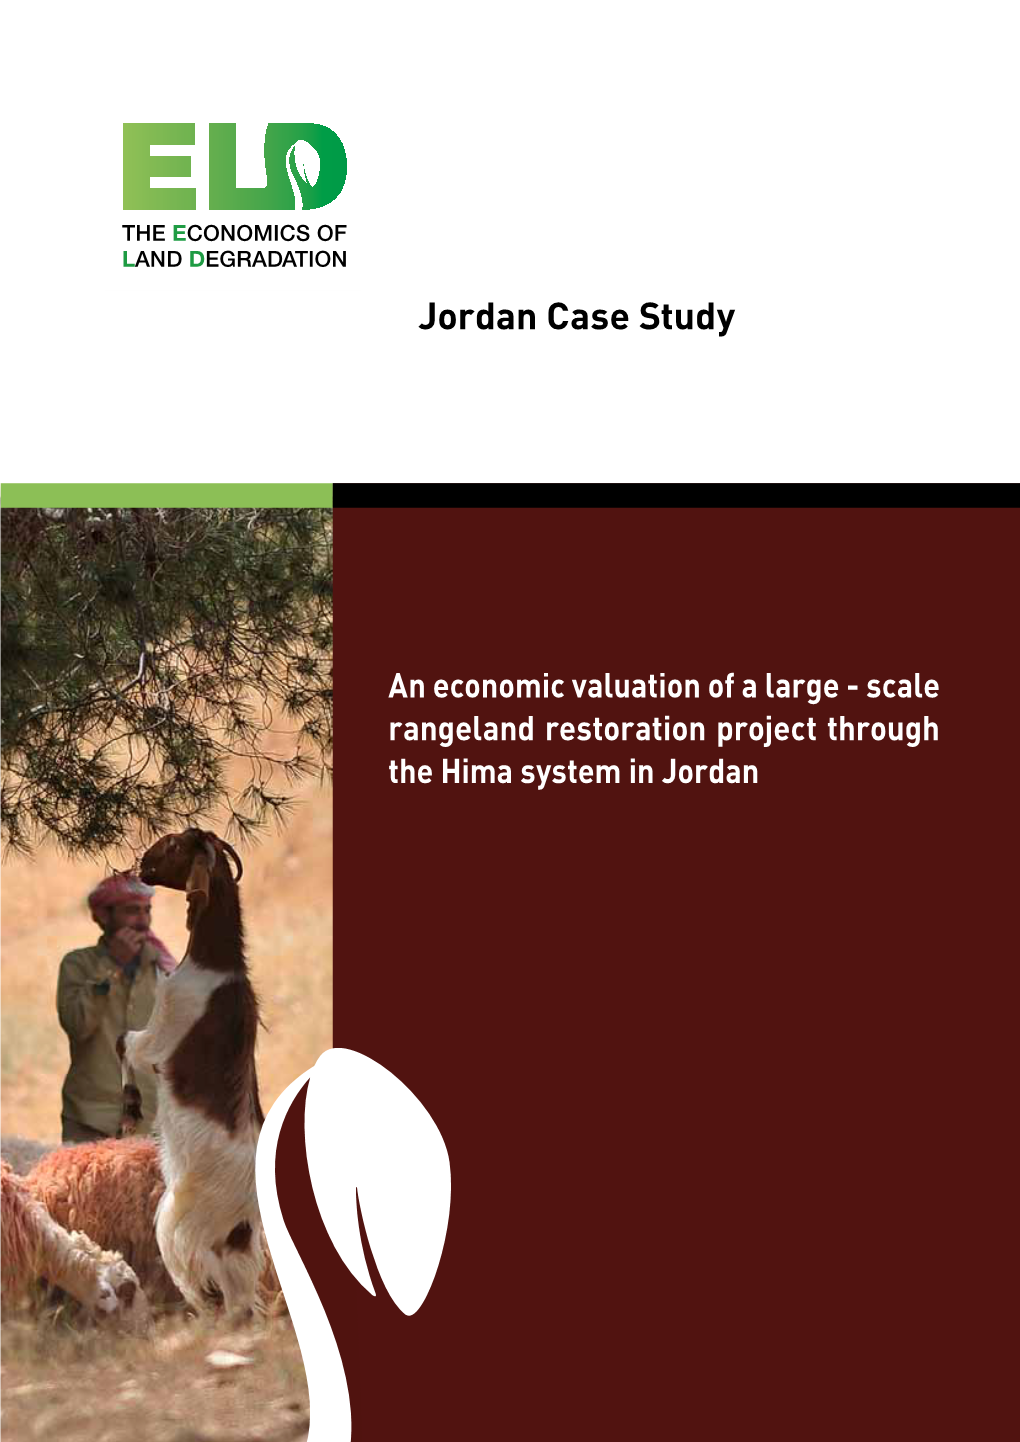 Scale Rangeland Restoration Project Through the Hima System in Jordan ISBN: 978-92-808-6057-3